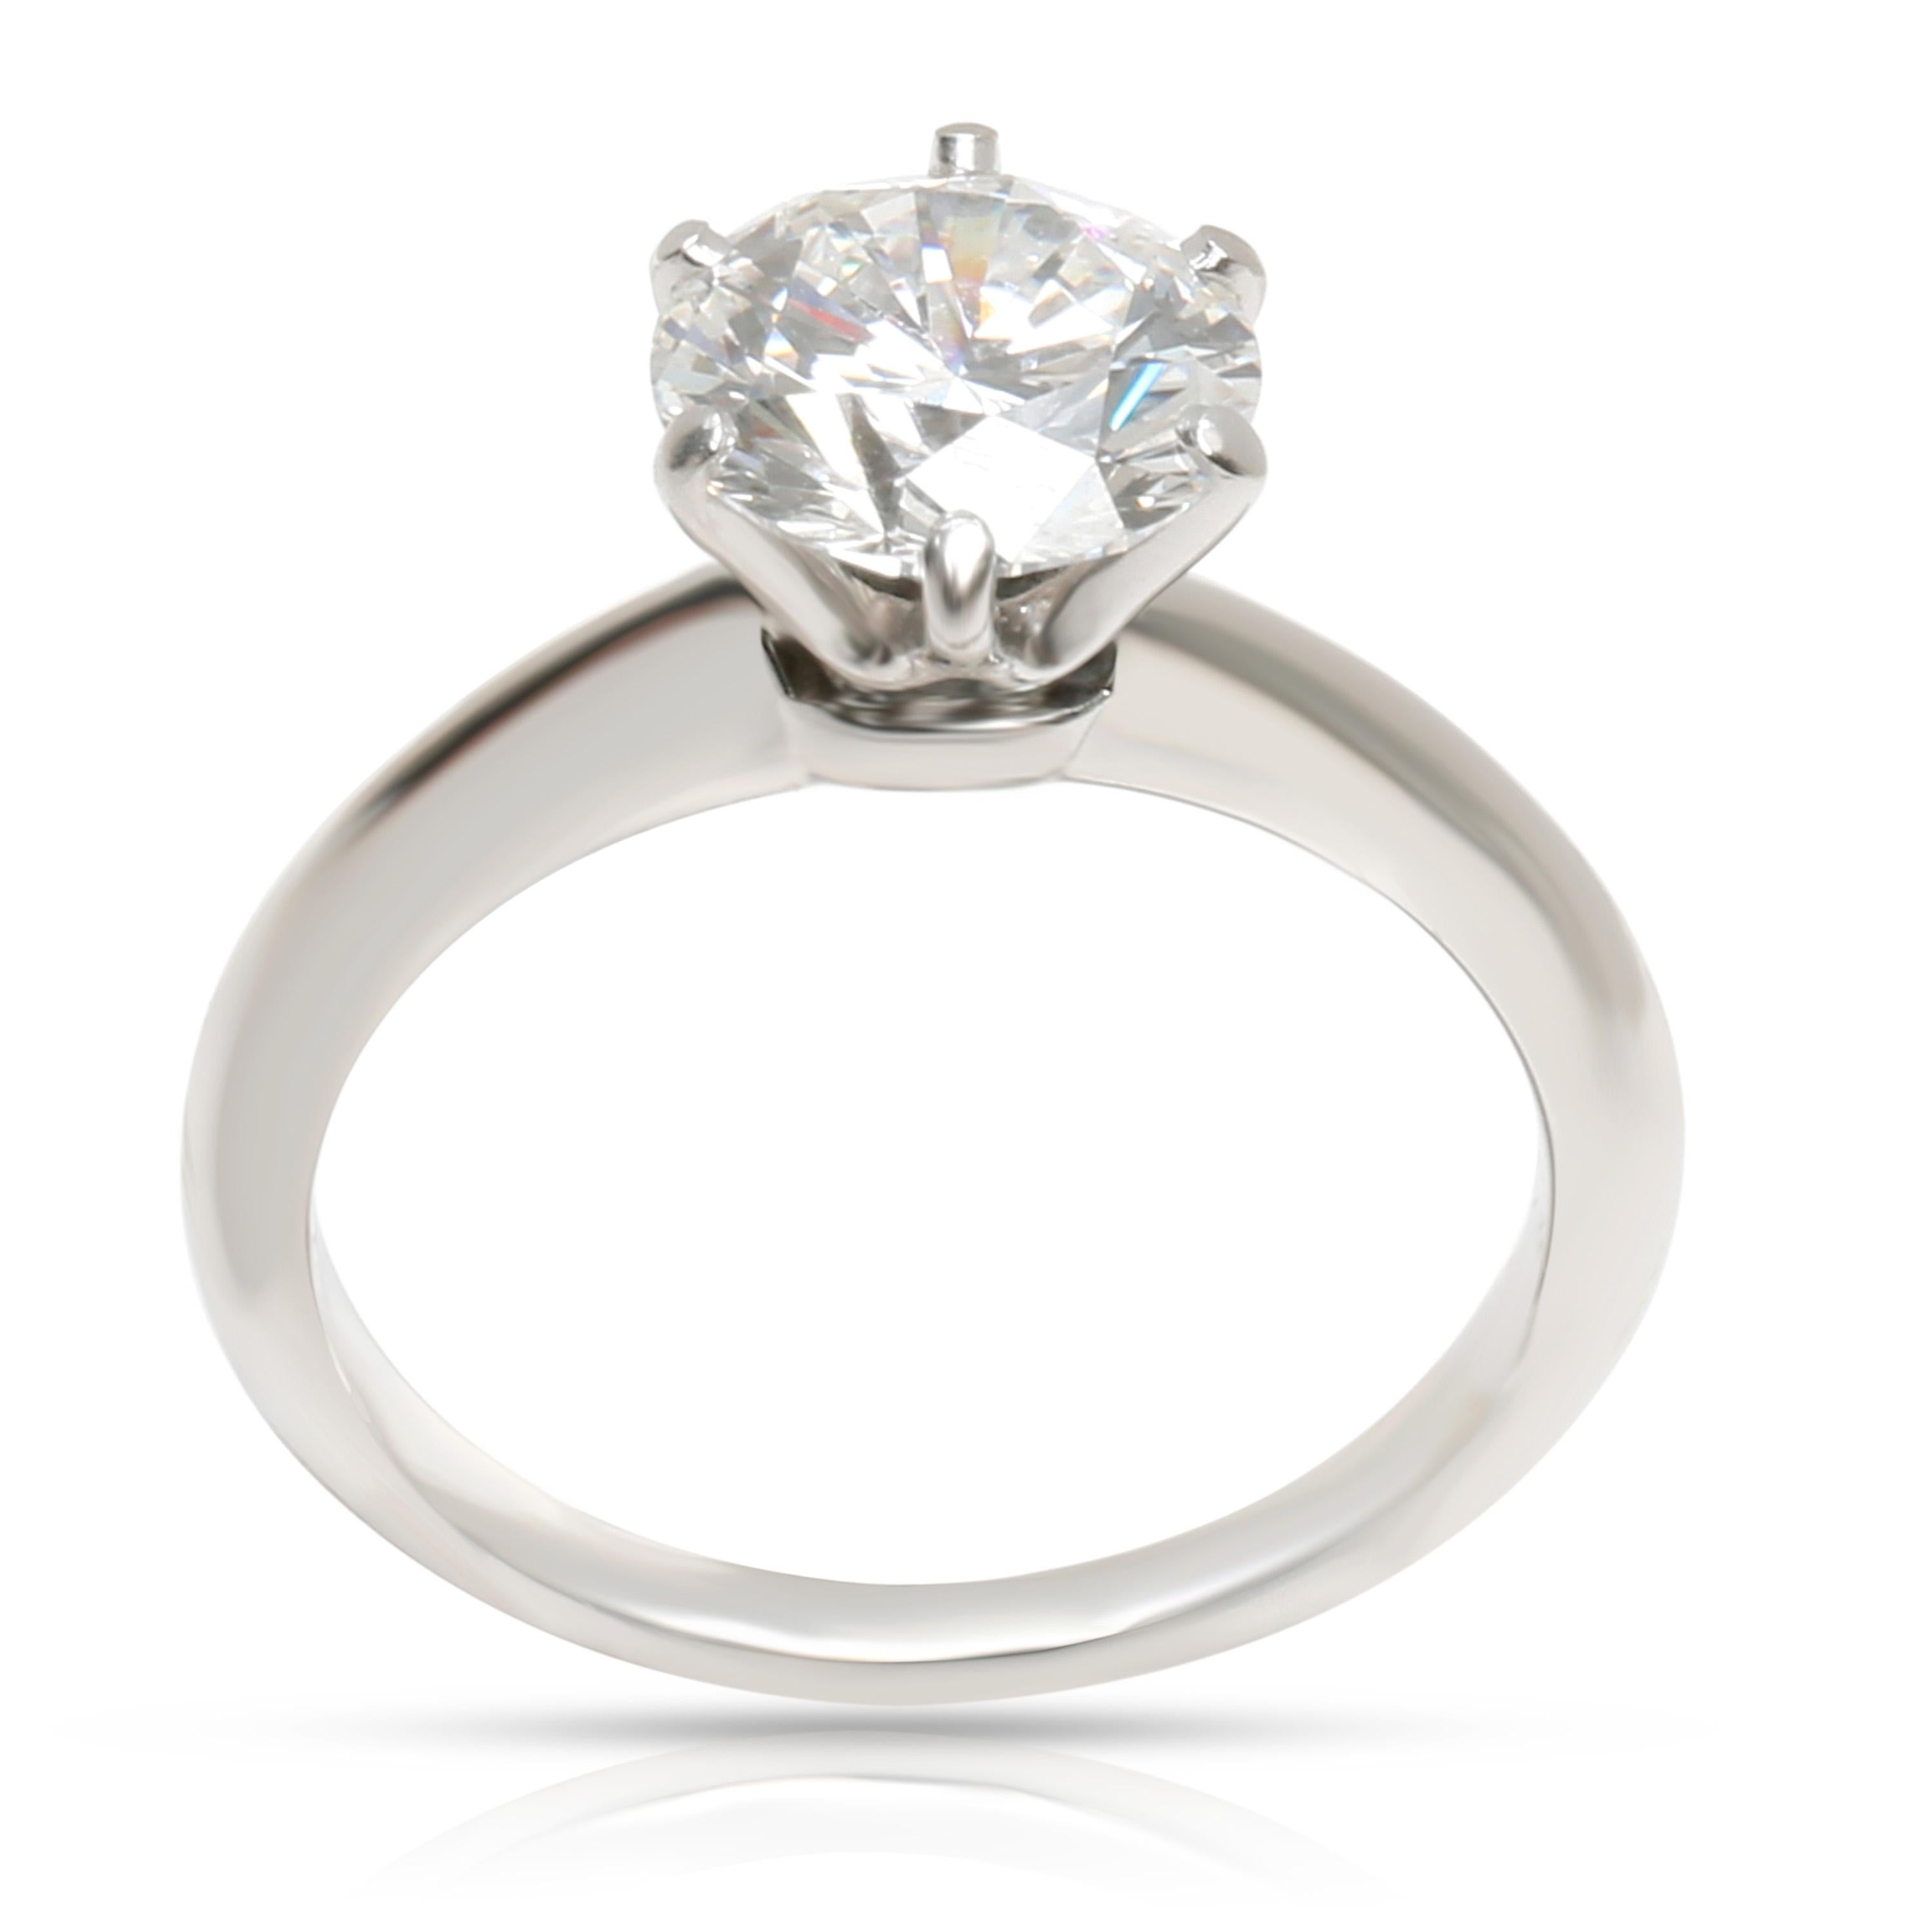 Round Cut Tiffany & Co. Diamond Solitaire Engagement Ring in Platinum '1.54 Carat F VVS2'